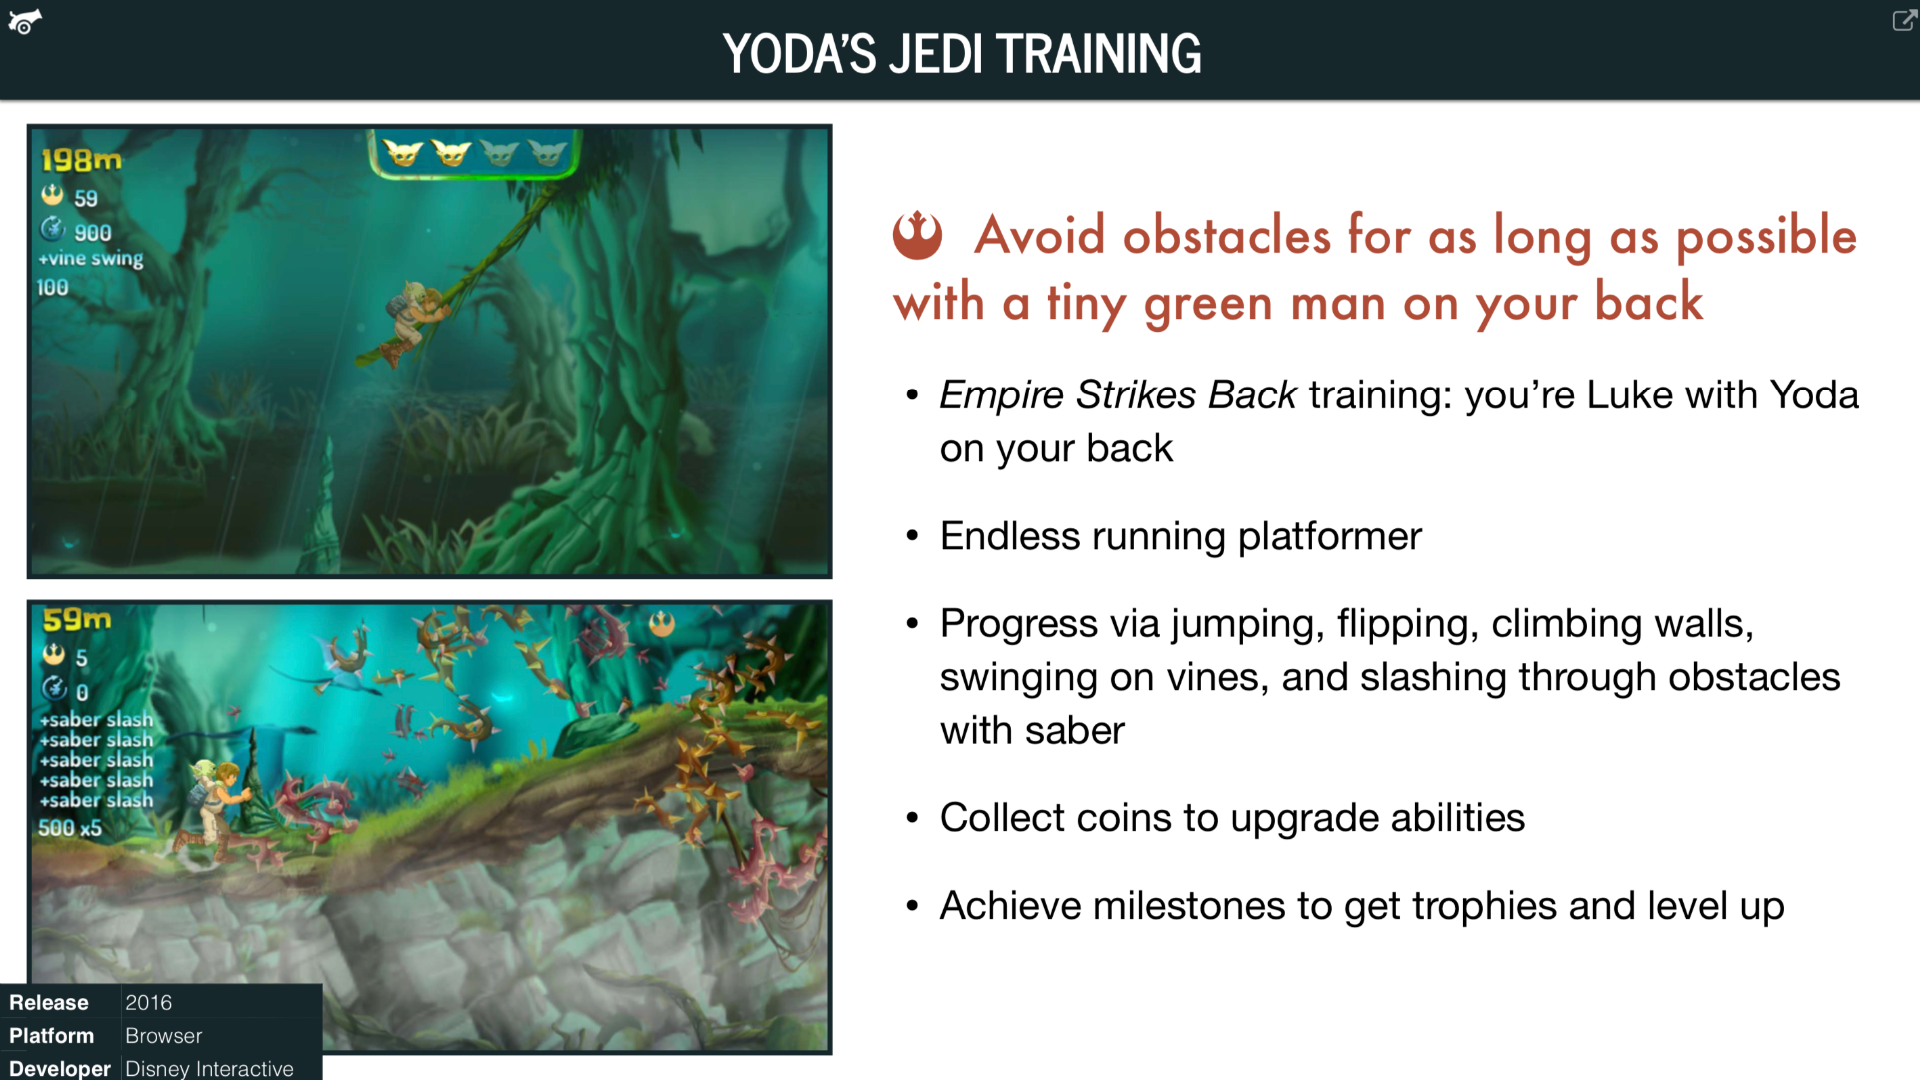 Overview of Yoda's Jedi Training (2016)